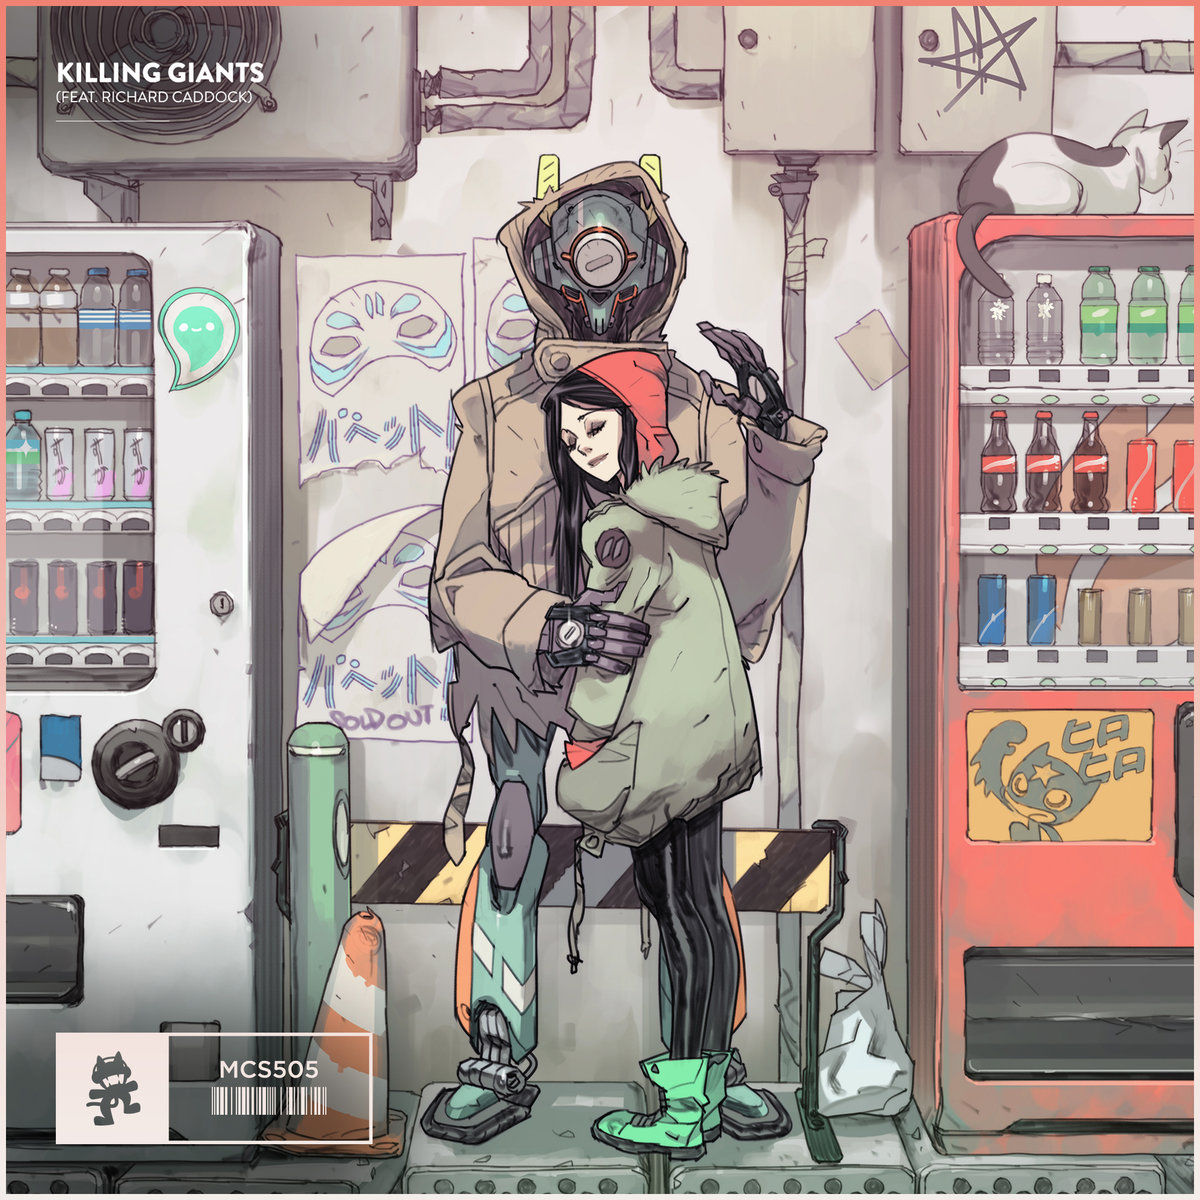 Puppet & Murtagh - Killing Giants (Feat. Richard Caddock) [Monstercat Release] (활기, 신남, 희망, 비트, 신비, 격렬)